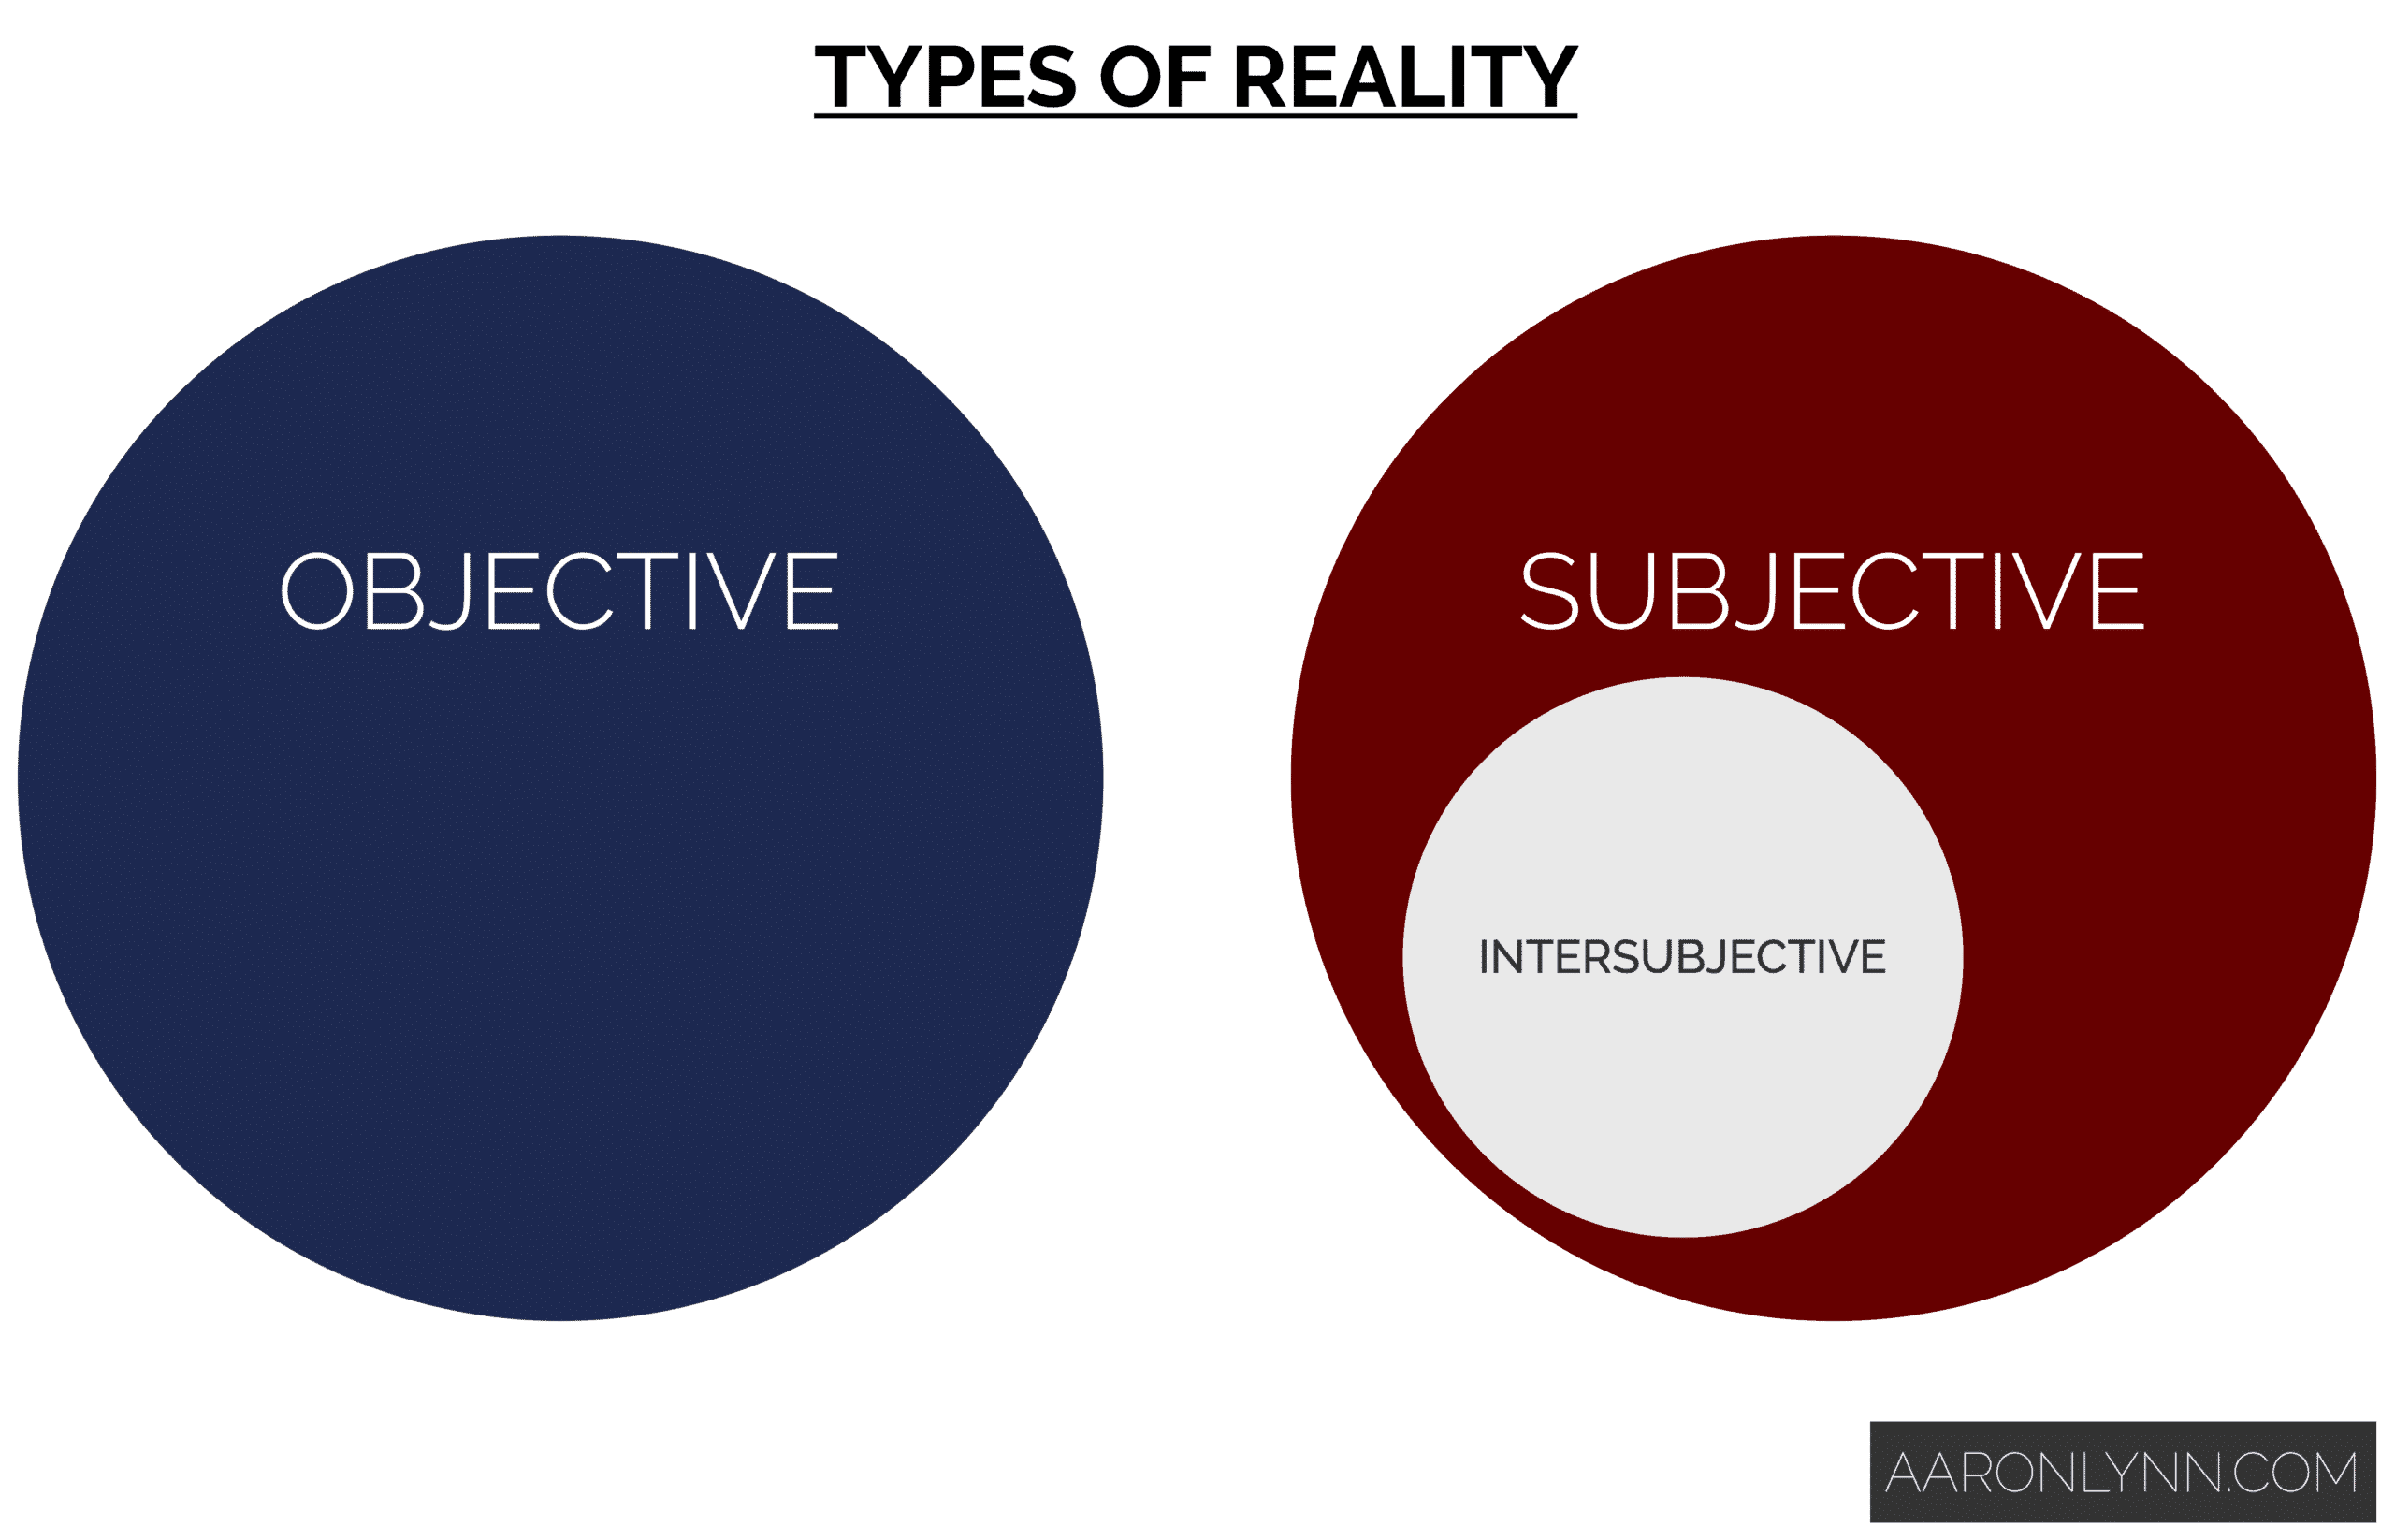 objective reality essay